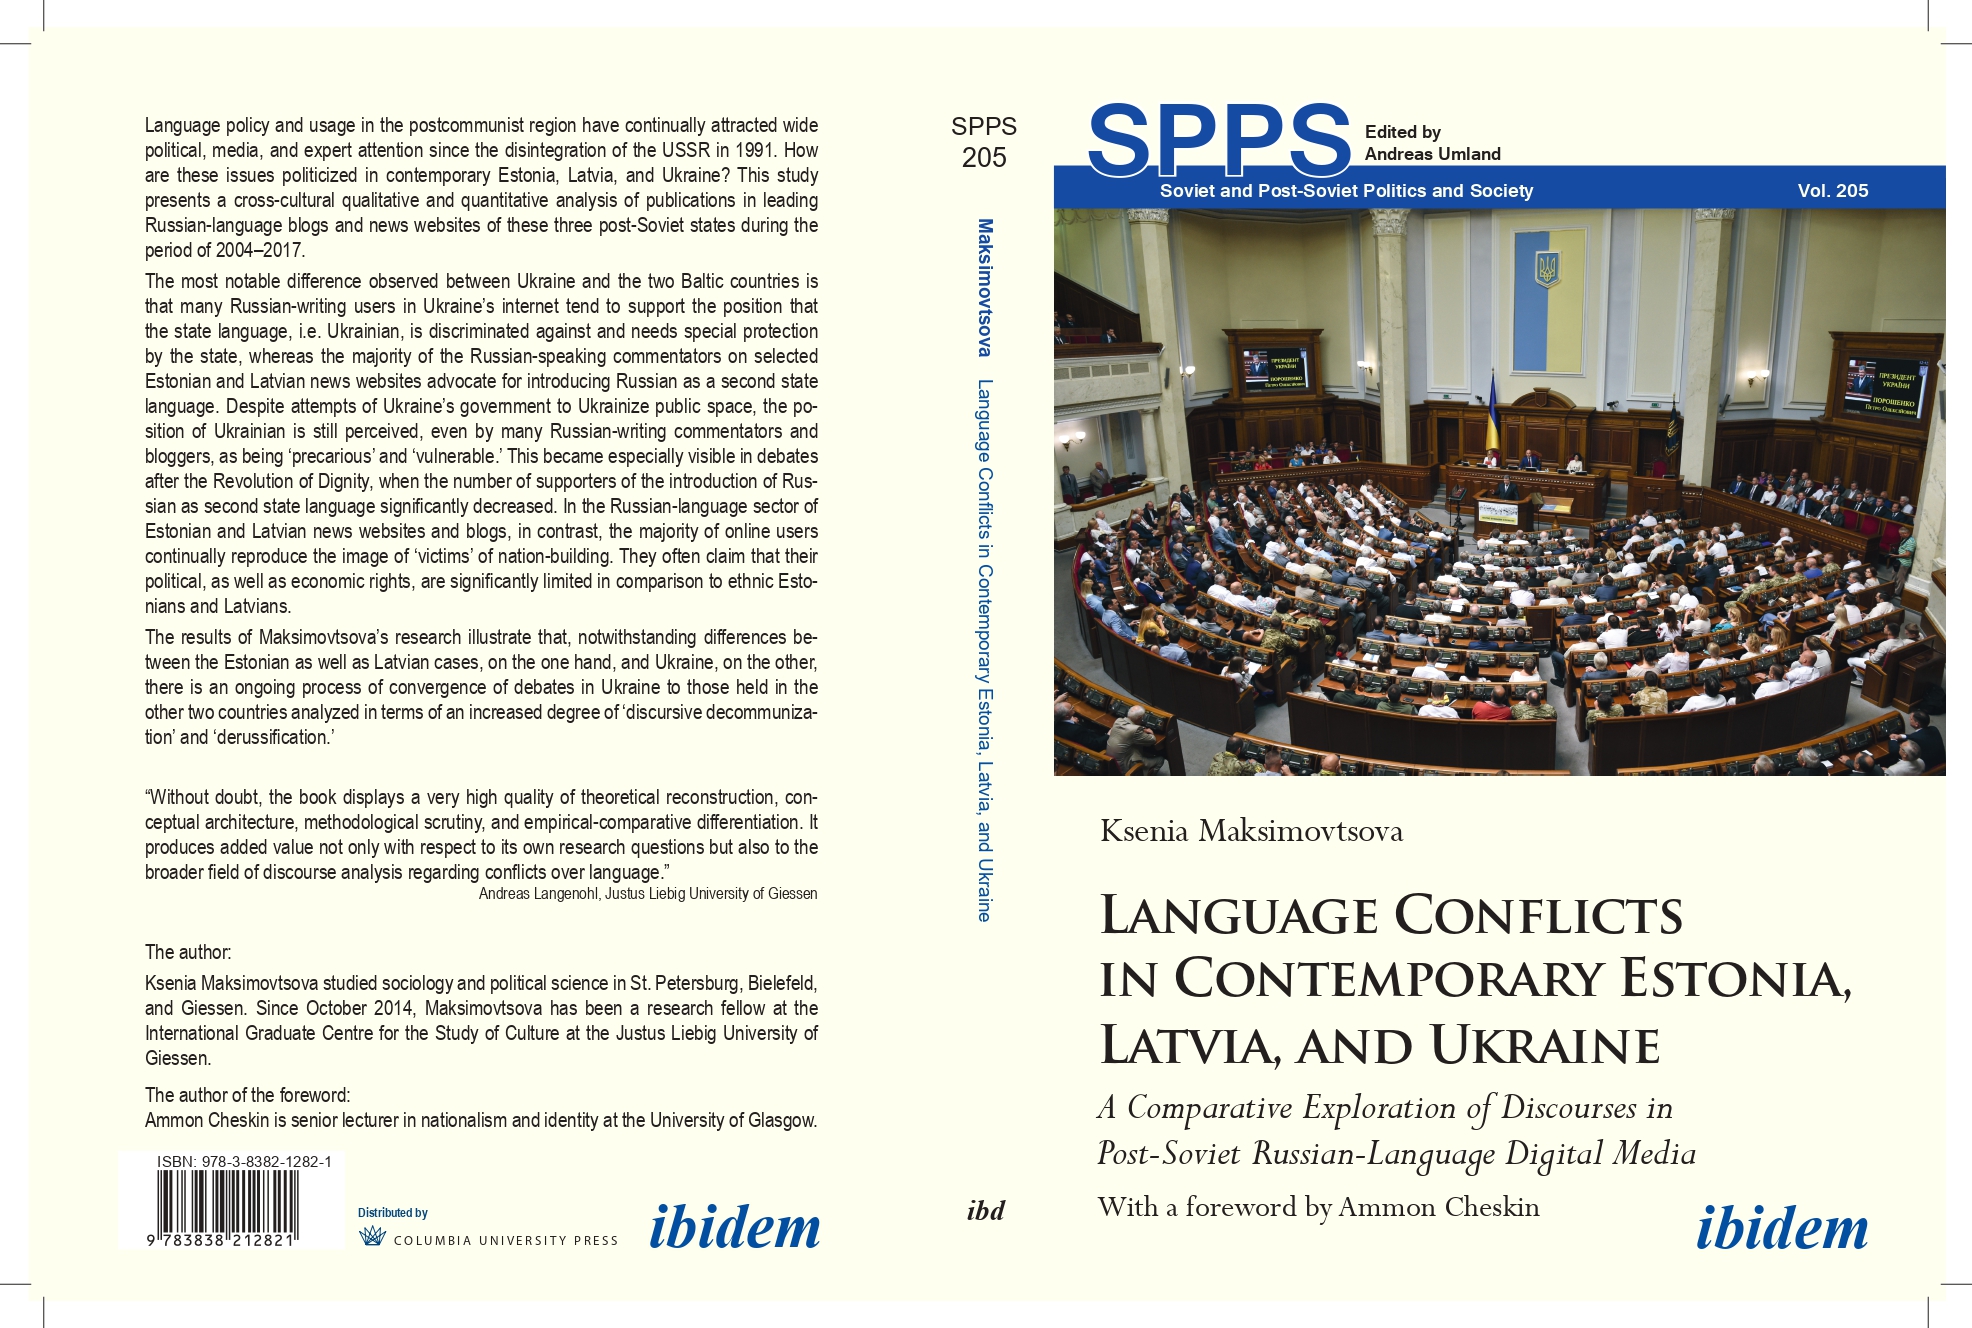 Language Conflicts in Contemporary Estonia, Latvia, and Ukraine. A Comparative Exploration of Discourses in Post-Soviet Russian-Language Digital Media